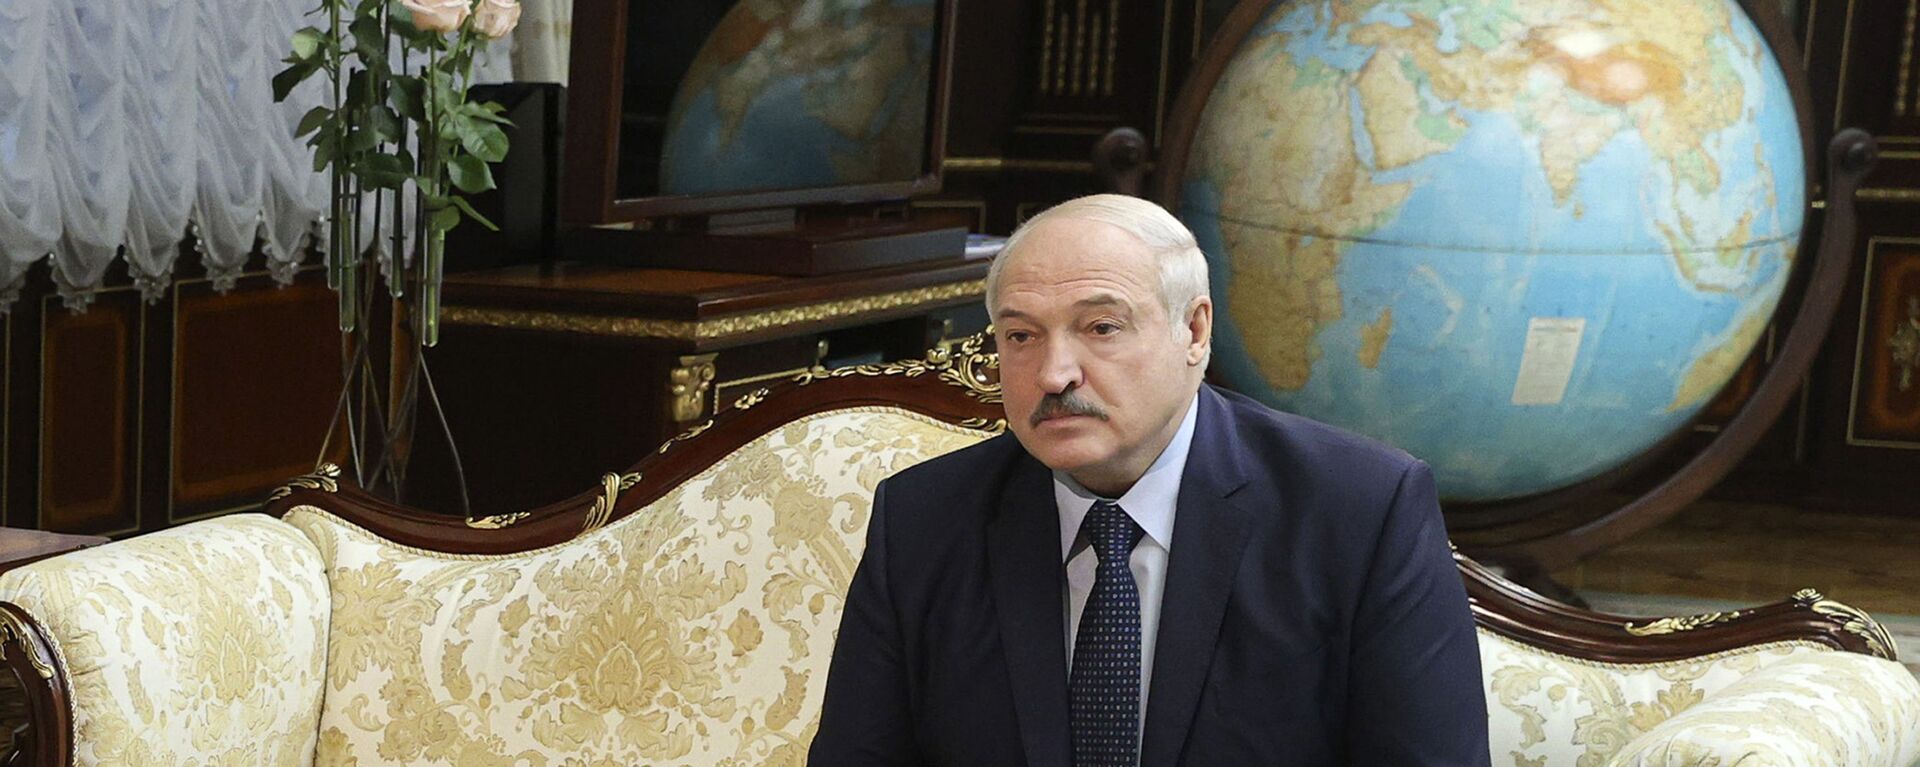 Президент Белоруссии Александр Лукашенко - Sputnik Литва, 1920, 25.05.2021